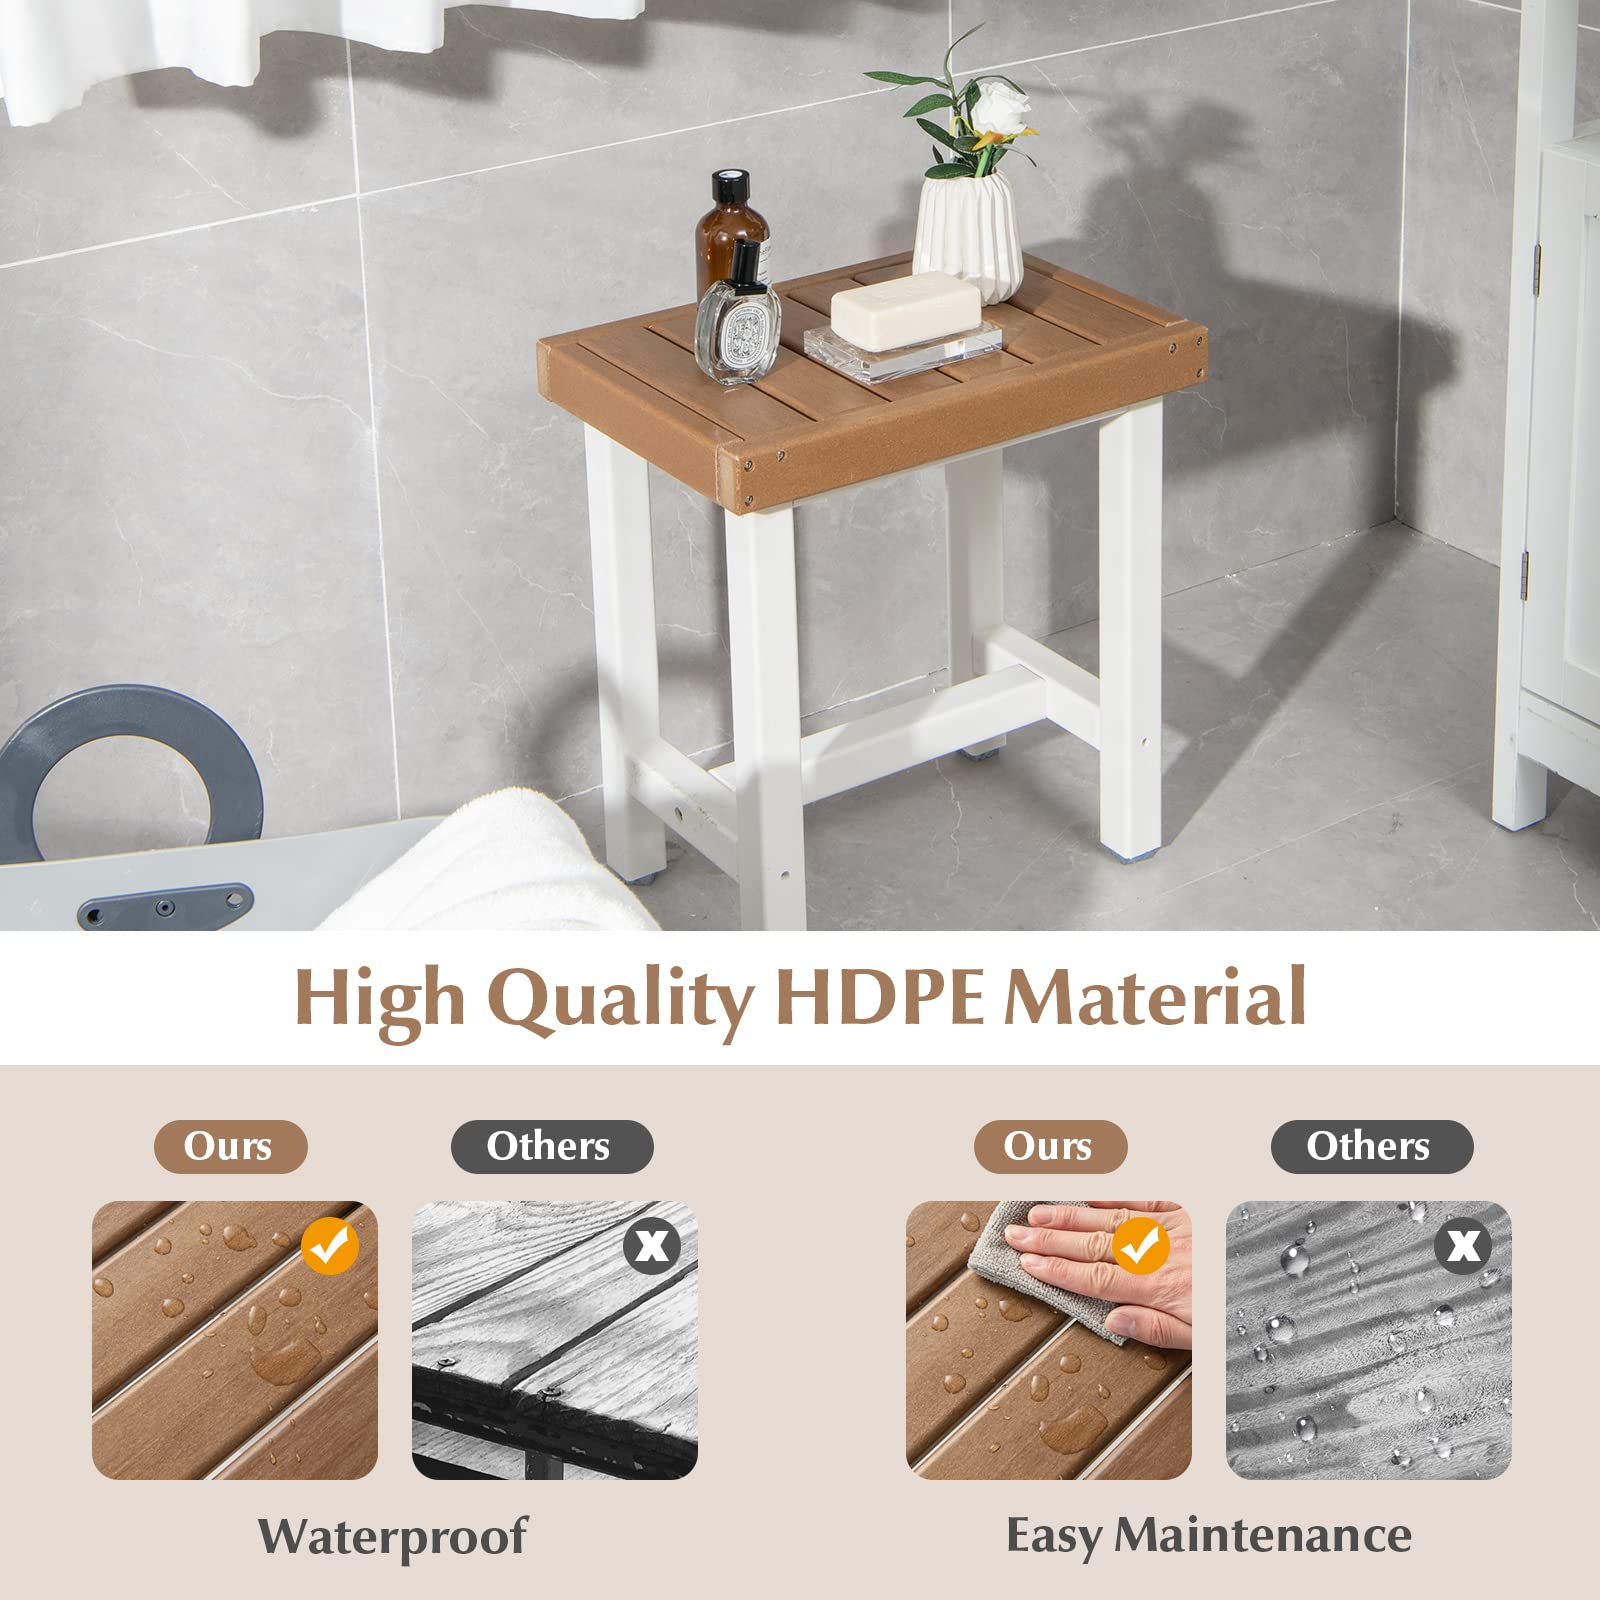 Giantex Shower Bench Waterproof HDPE - Shower Stool, Plastic Spa Bath Step Foot Rest for Bathroom